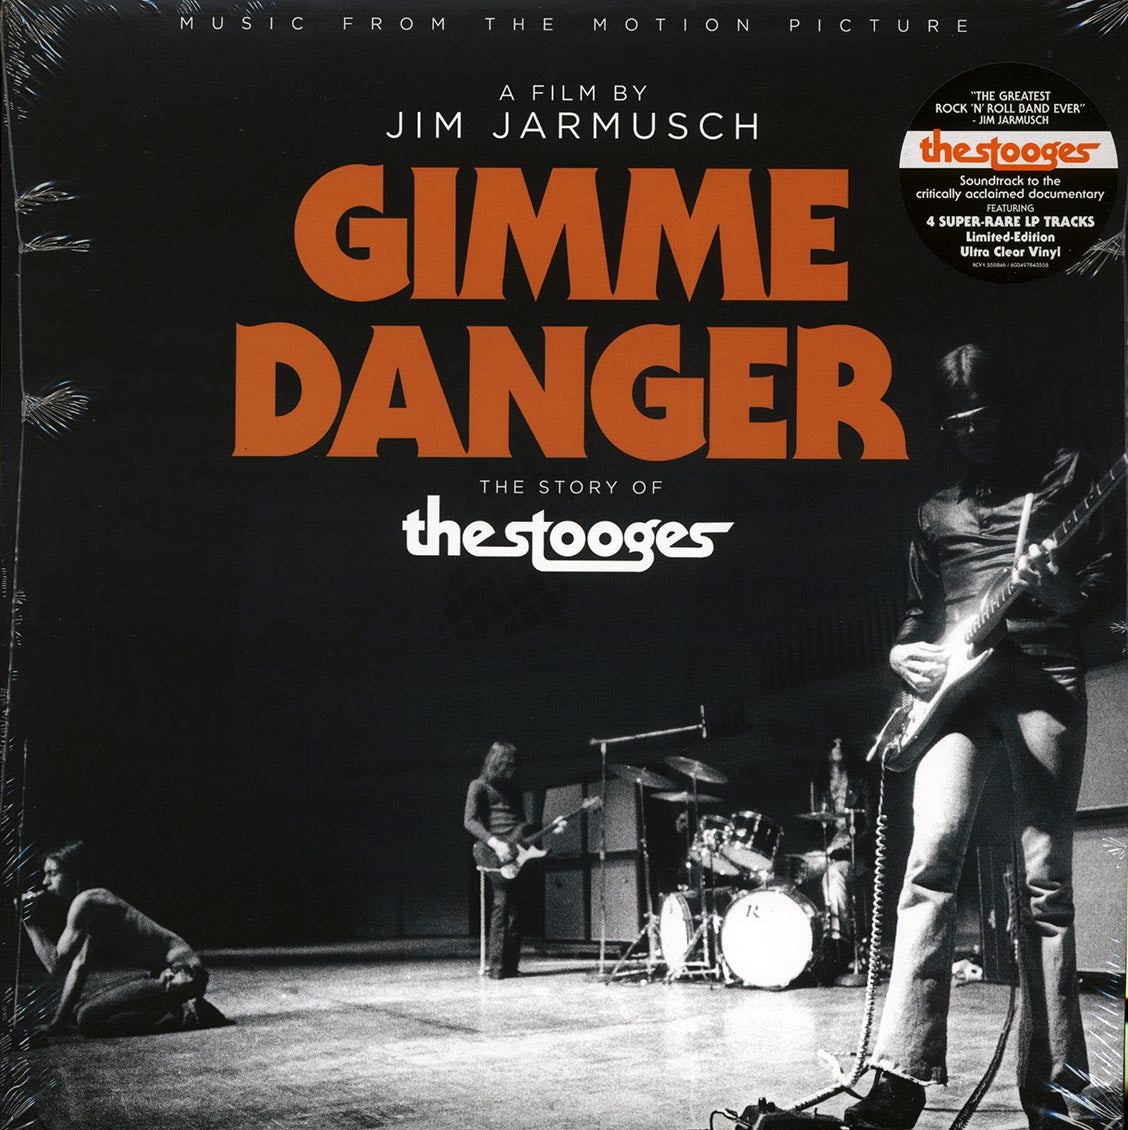 The Stooges - Gimme Danger: Music From The Motion Picture (ltd. ed.) (clear vinyl) - Vinyl LP